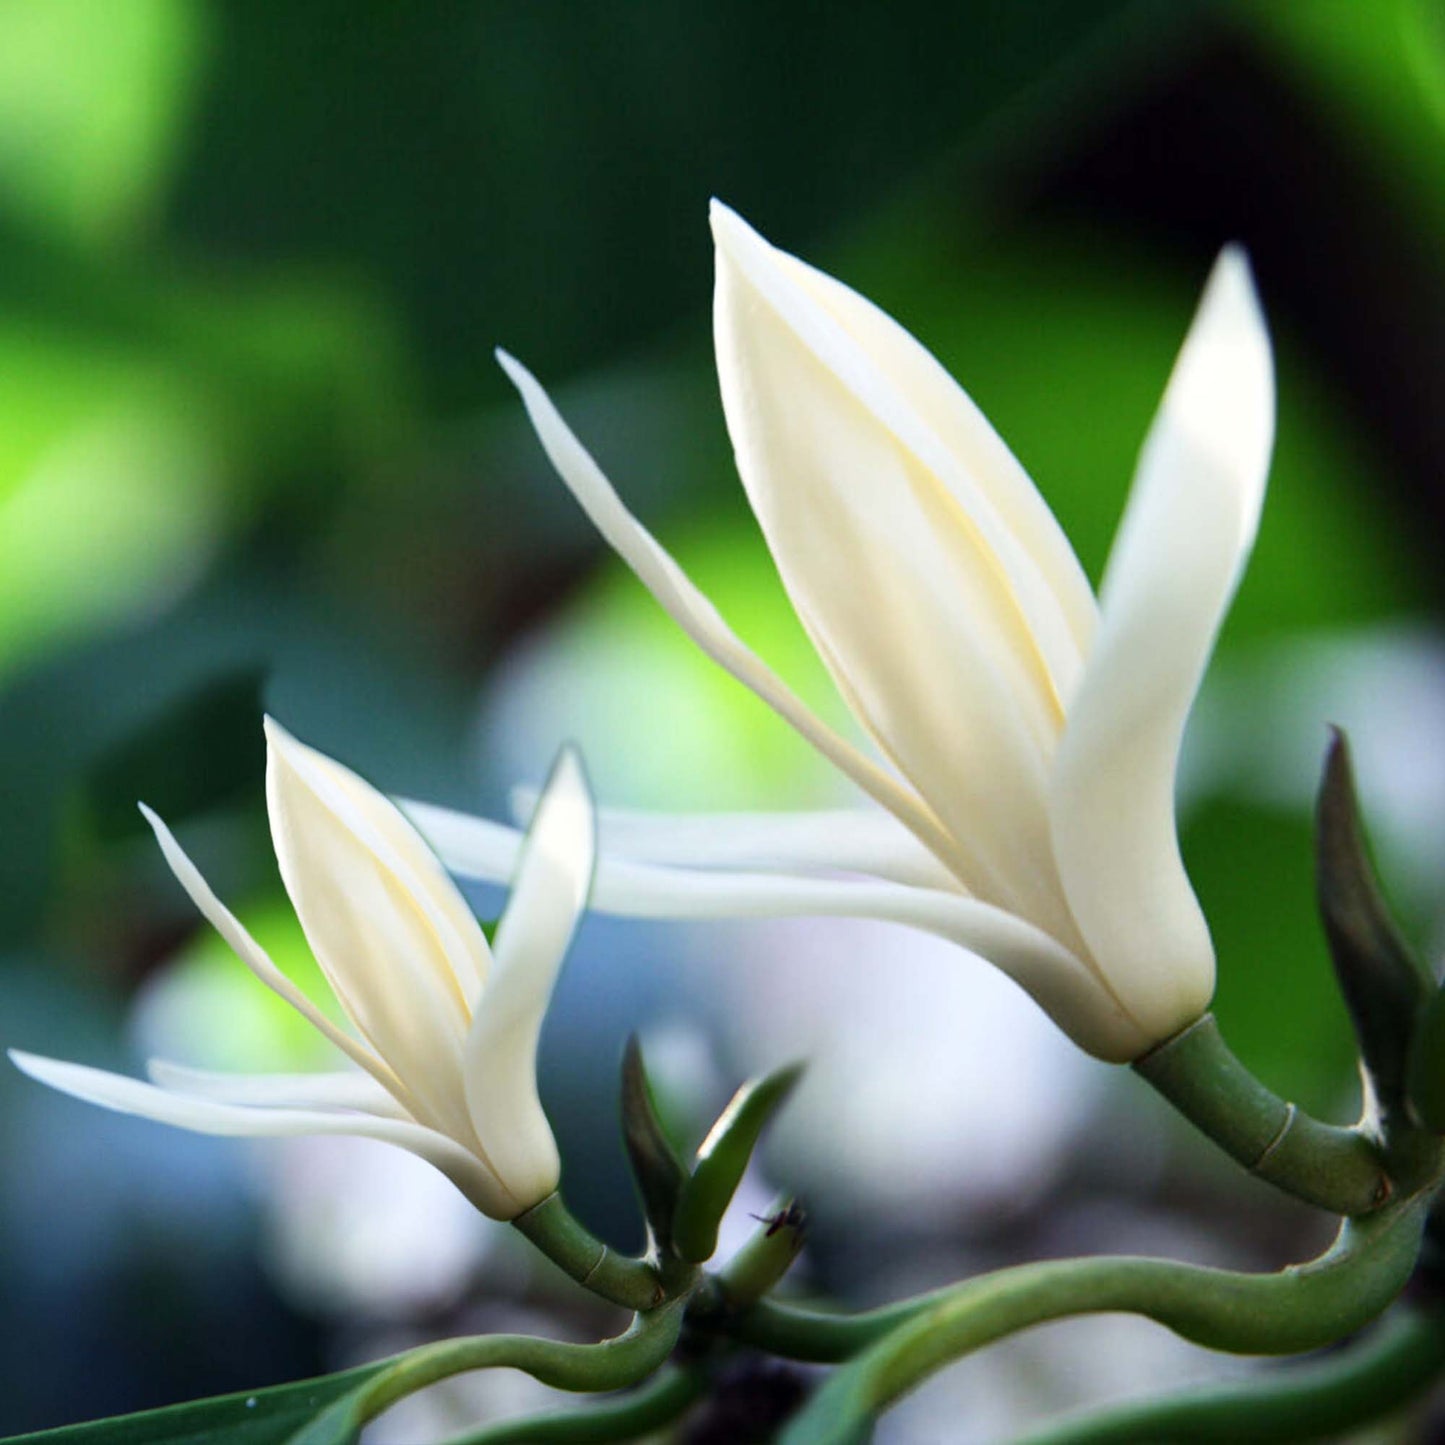 Michelia Alba/Magnolia (White Flowers) Live Plant